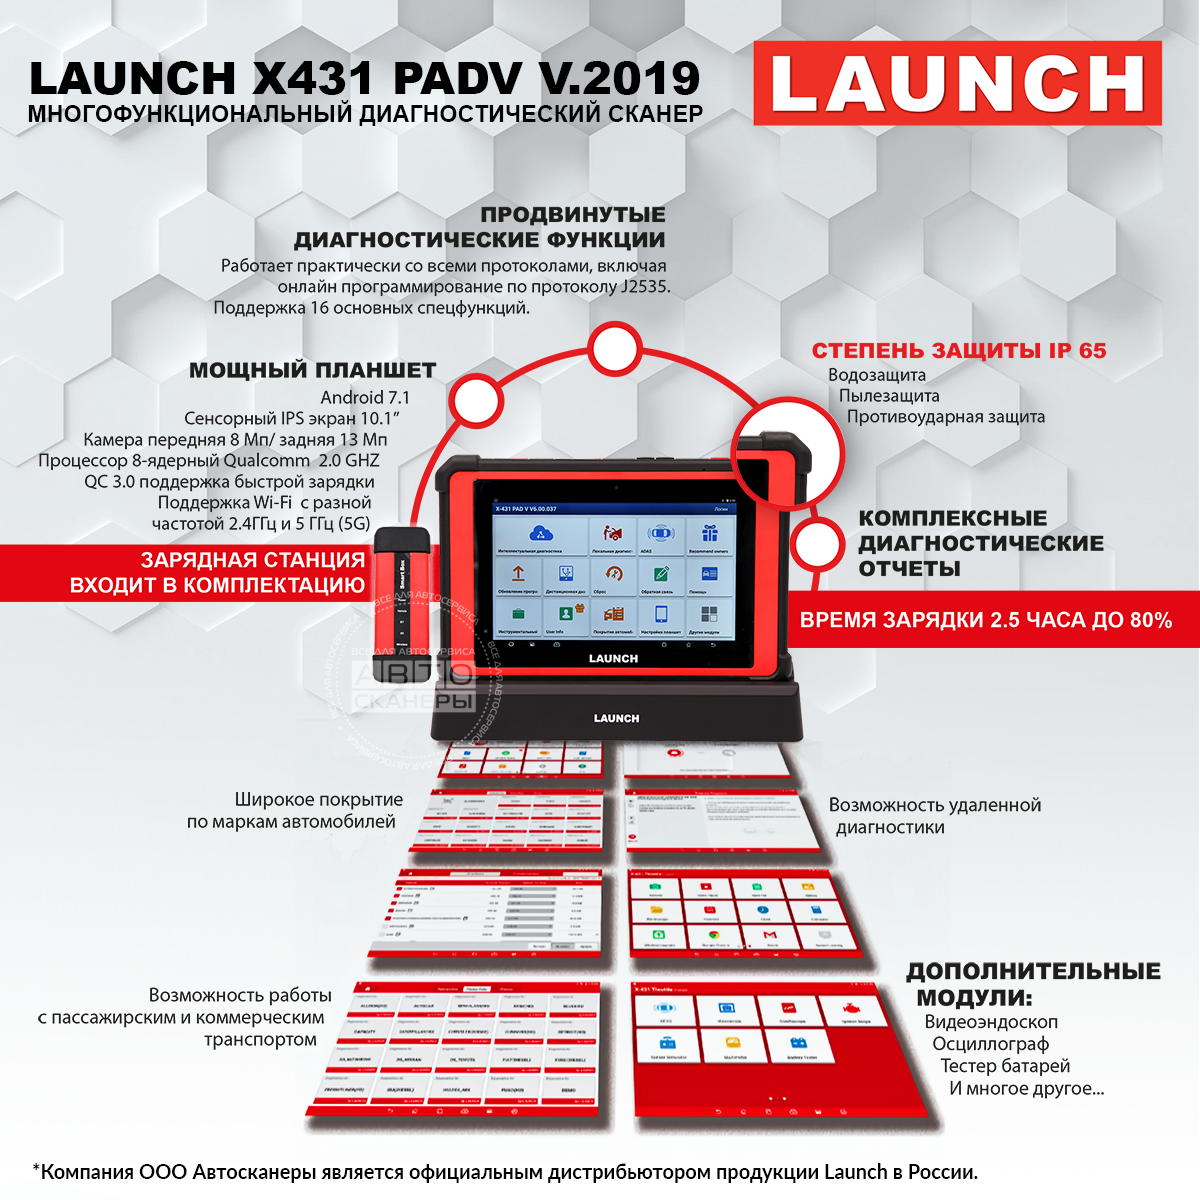 LAUNCH X431 PADV V.2019.png